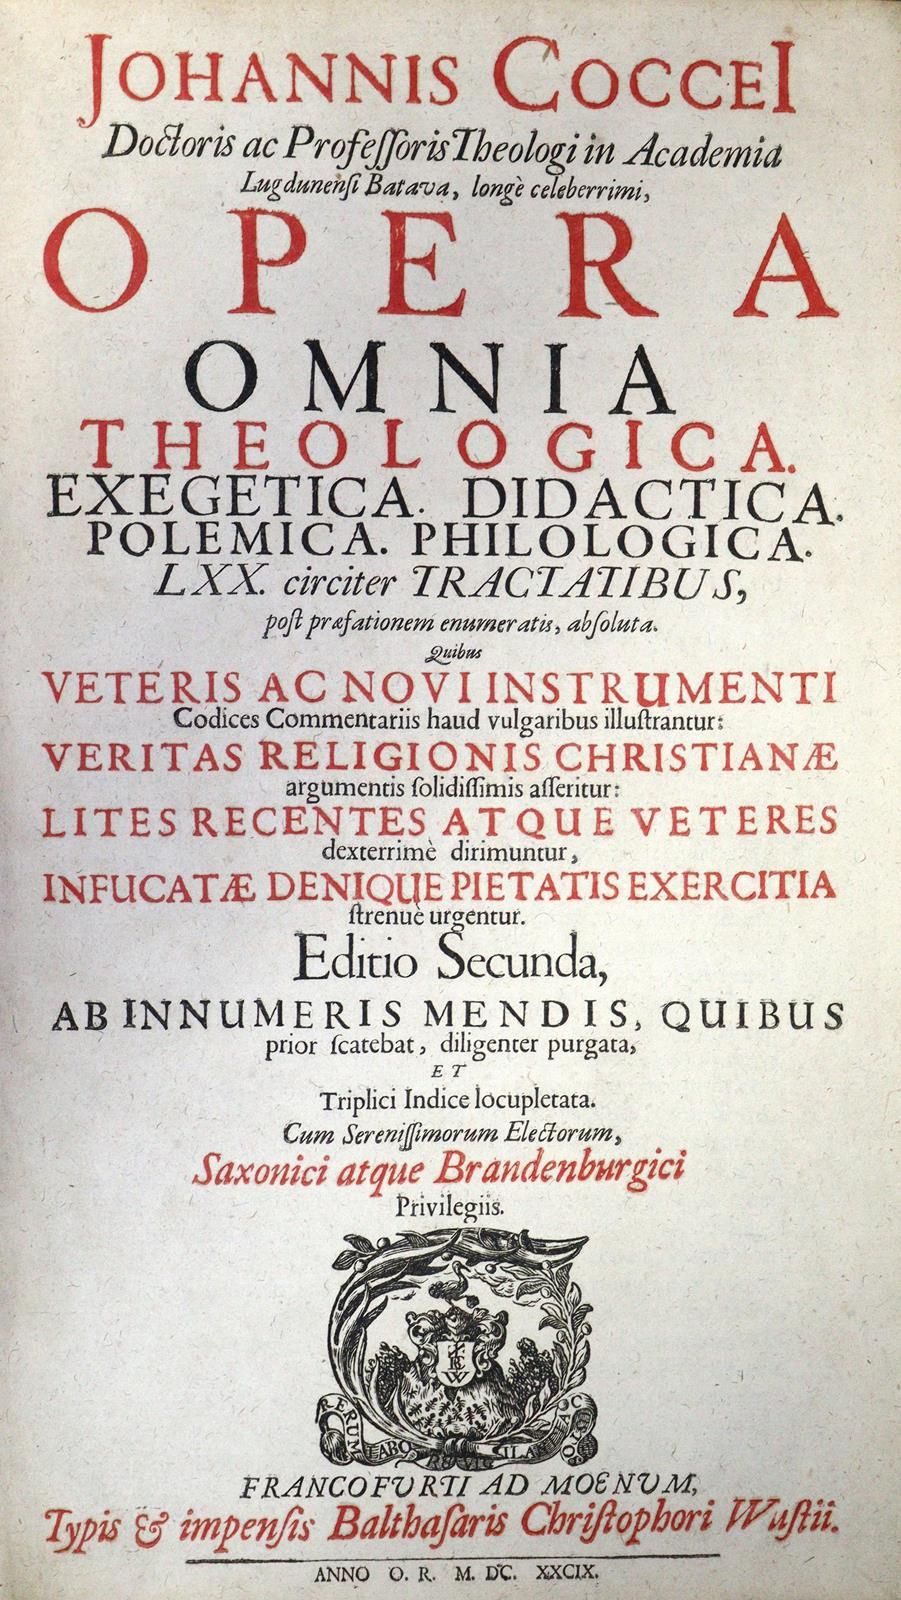 Coccejus,J. Opera omnia theologica, exegetica, didactica, polemica, philologica.&hellip;